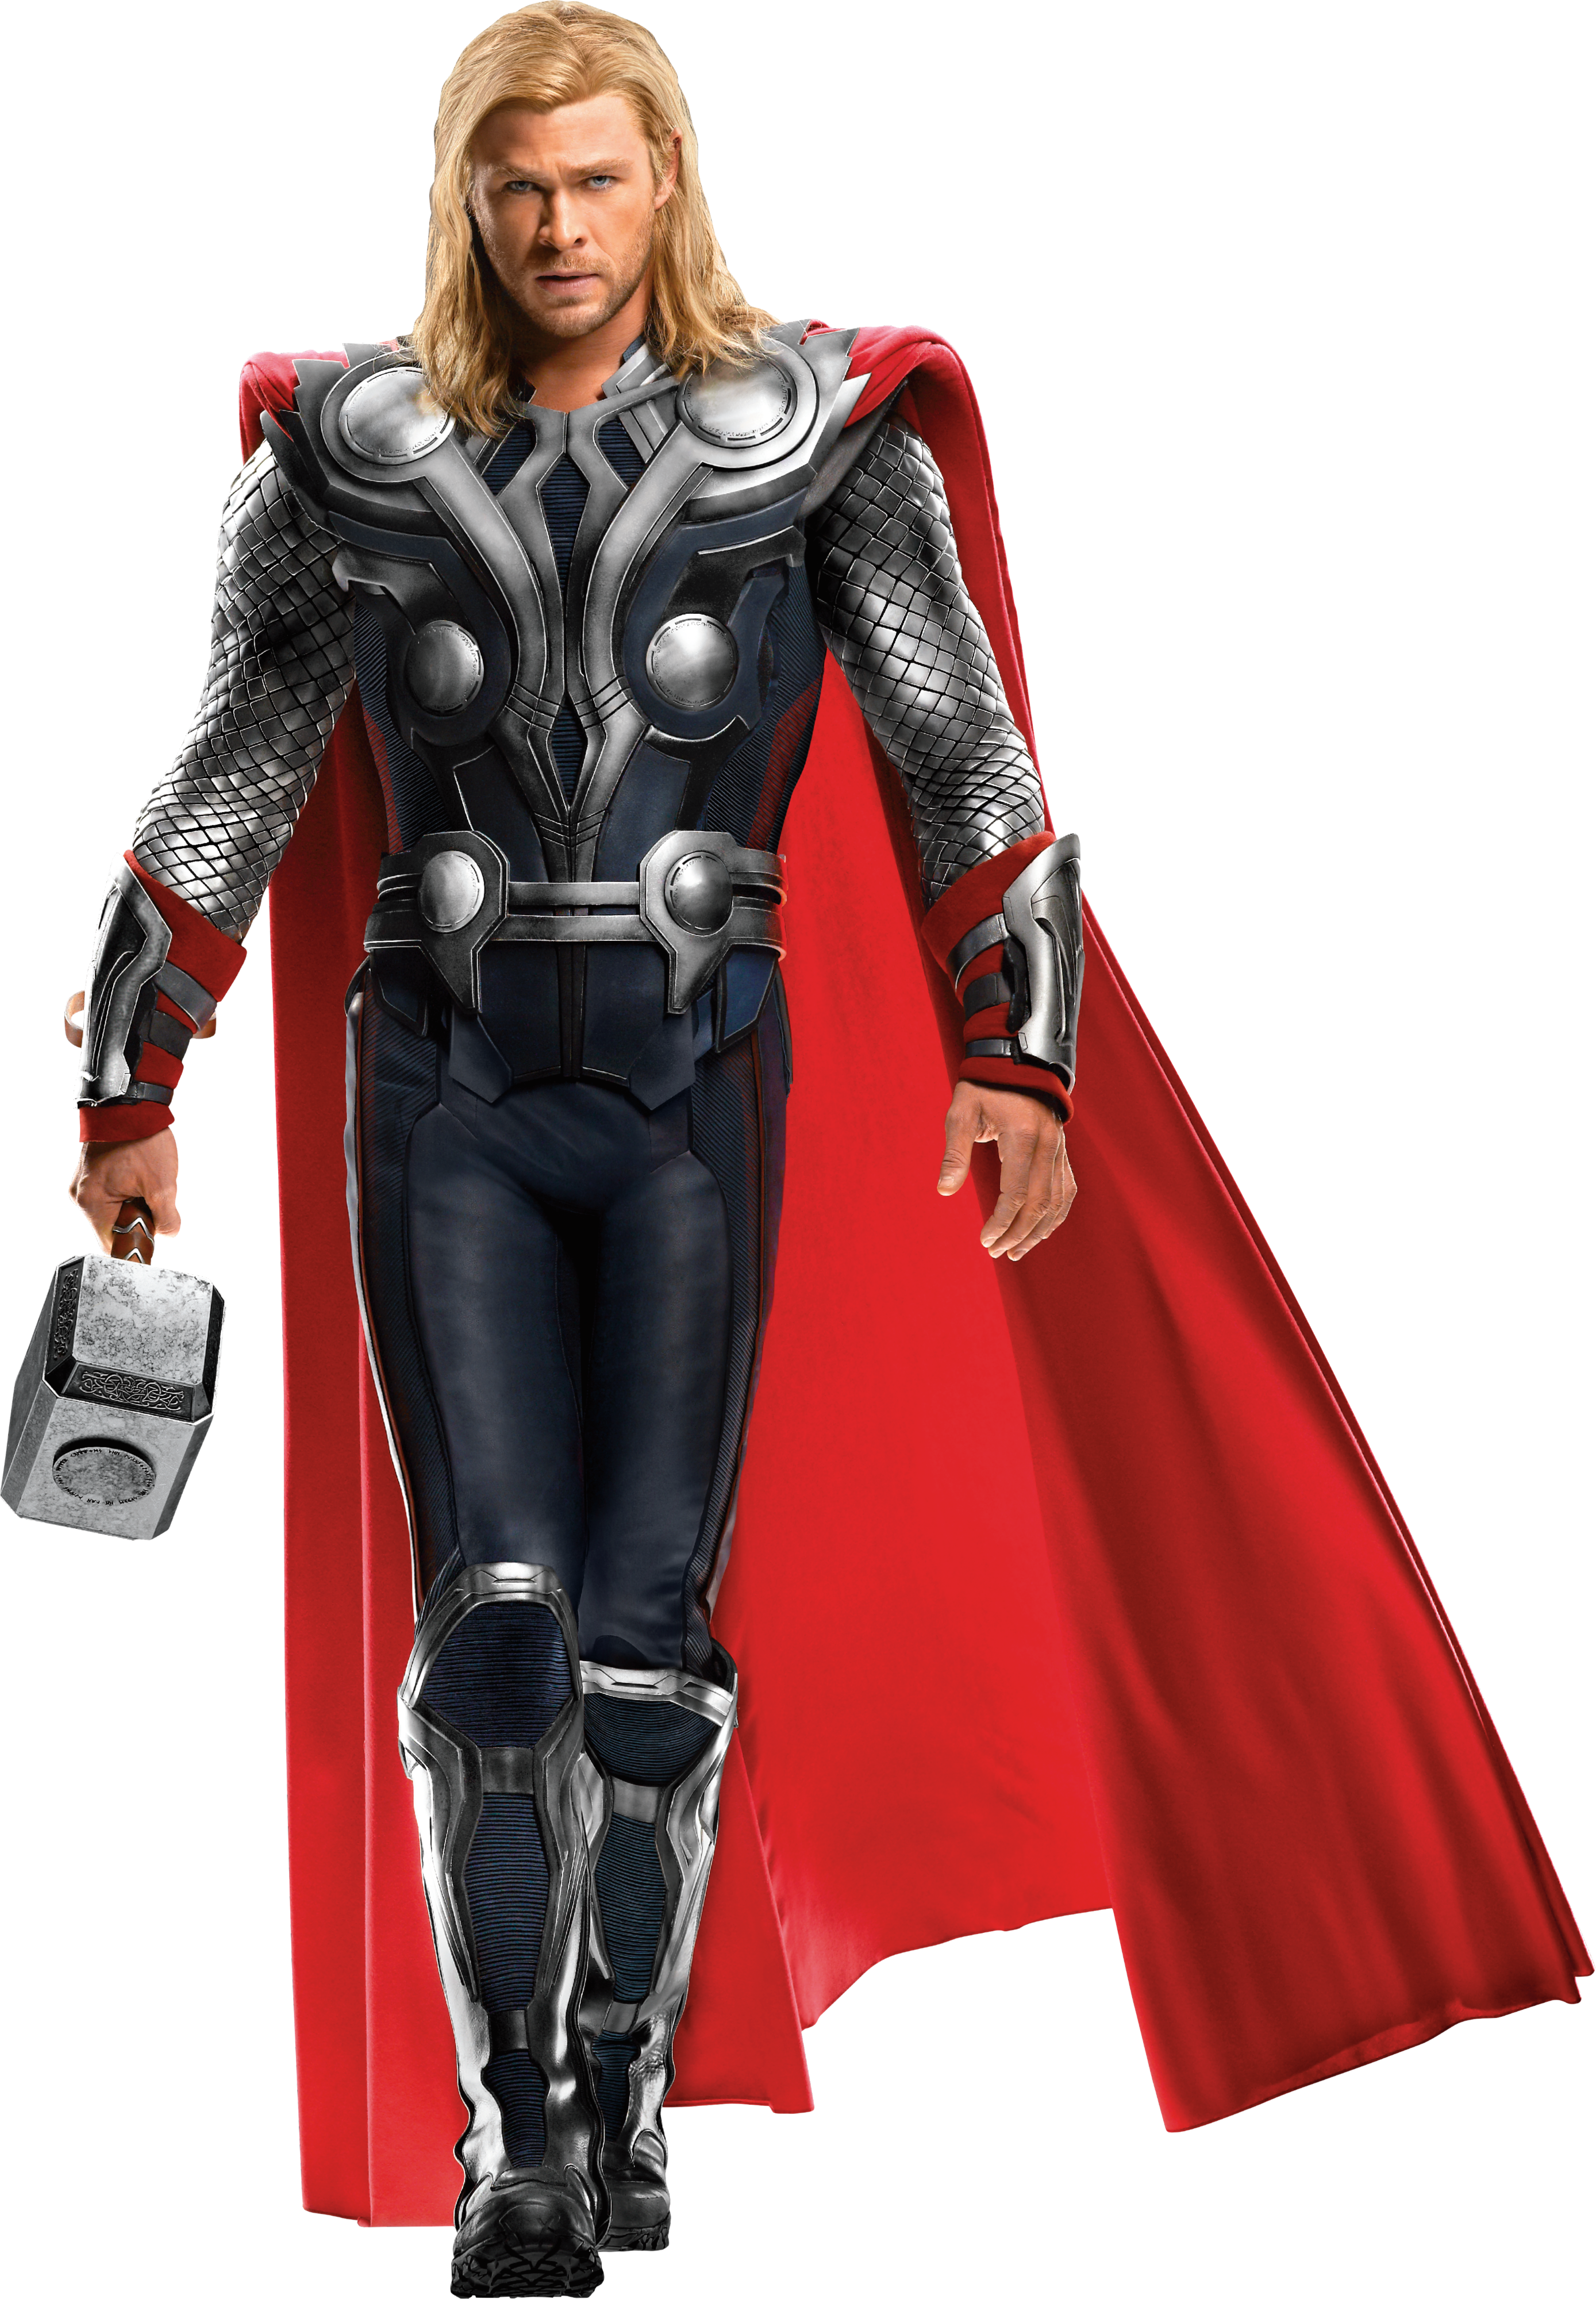 The America Thor Iron Chris Hemsworth Captain PNG Image